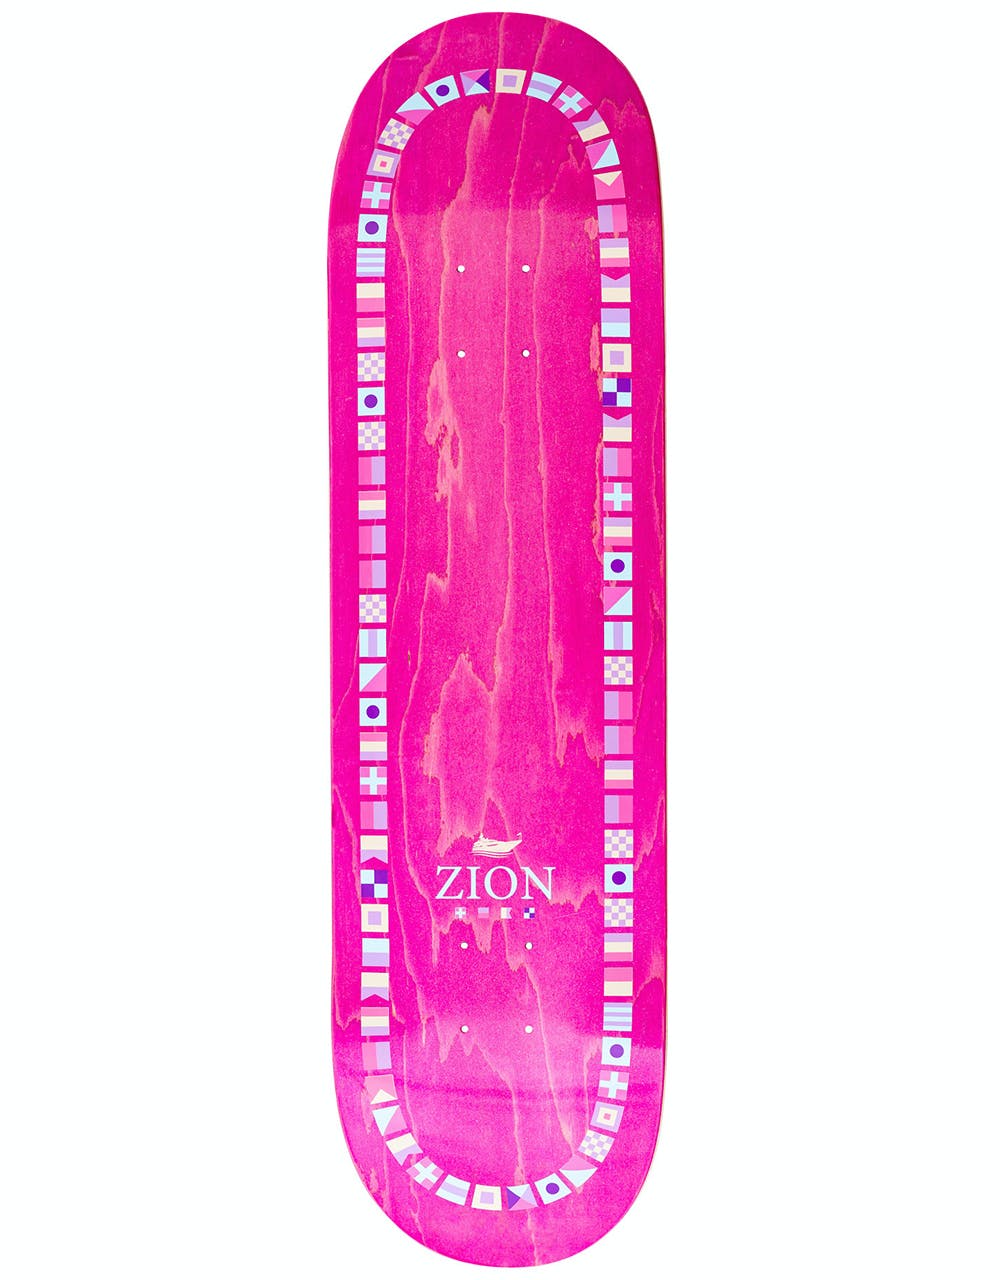 Real Zion High Seas Skateboard Deck - 8.5"